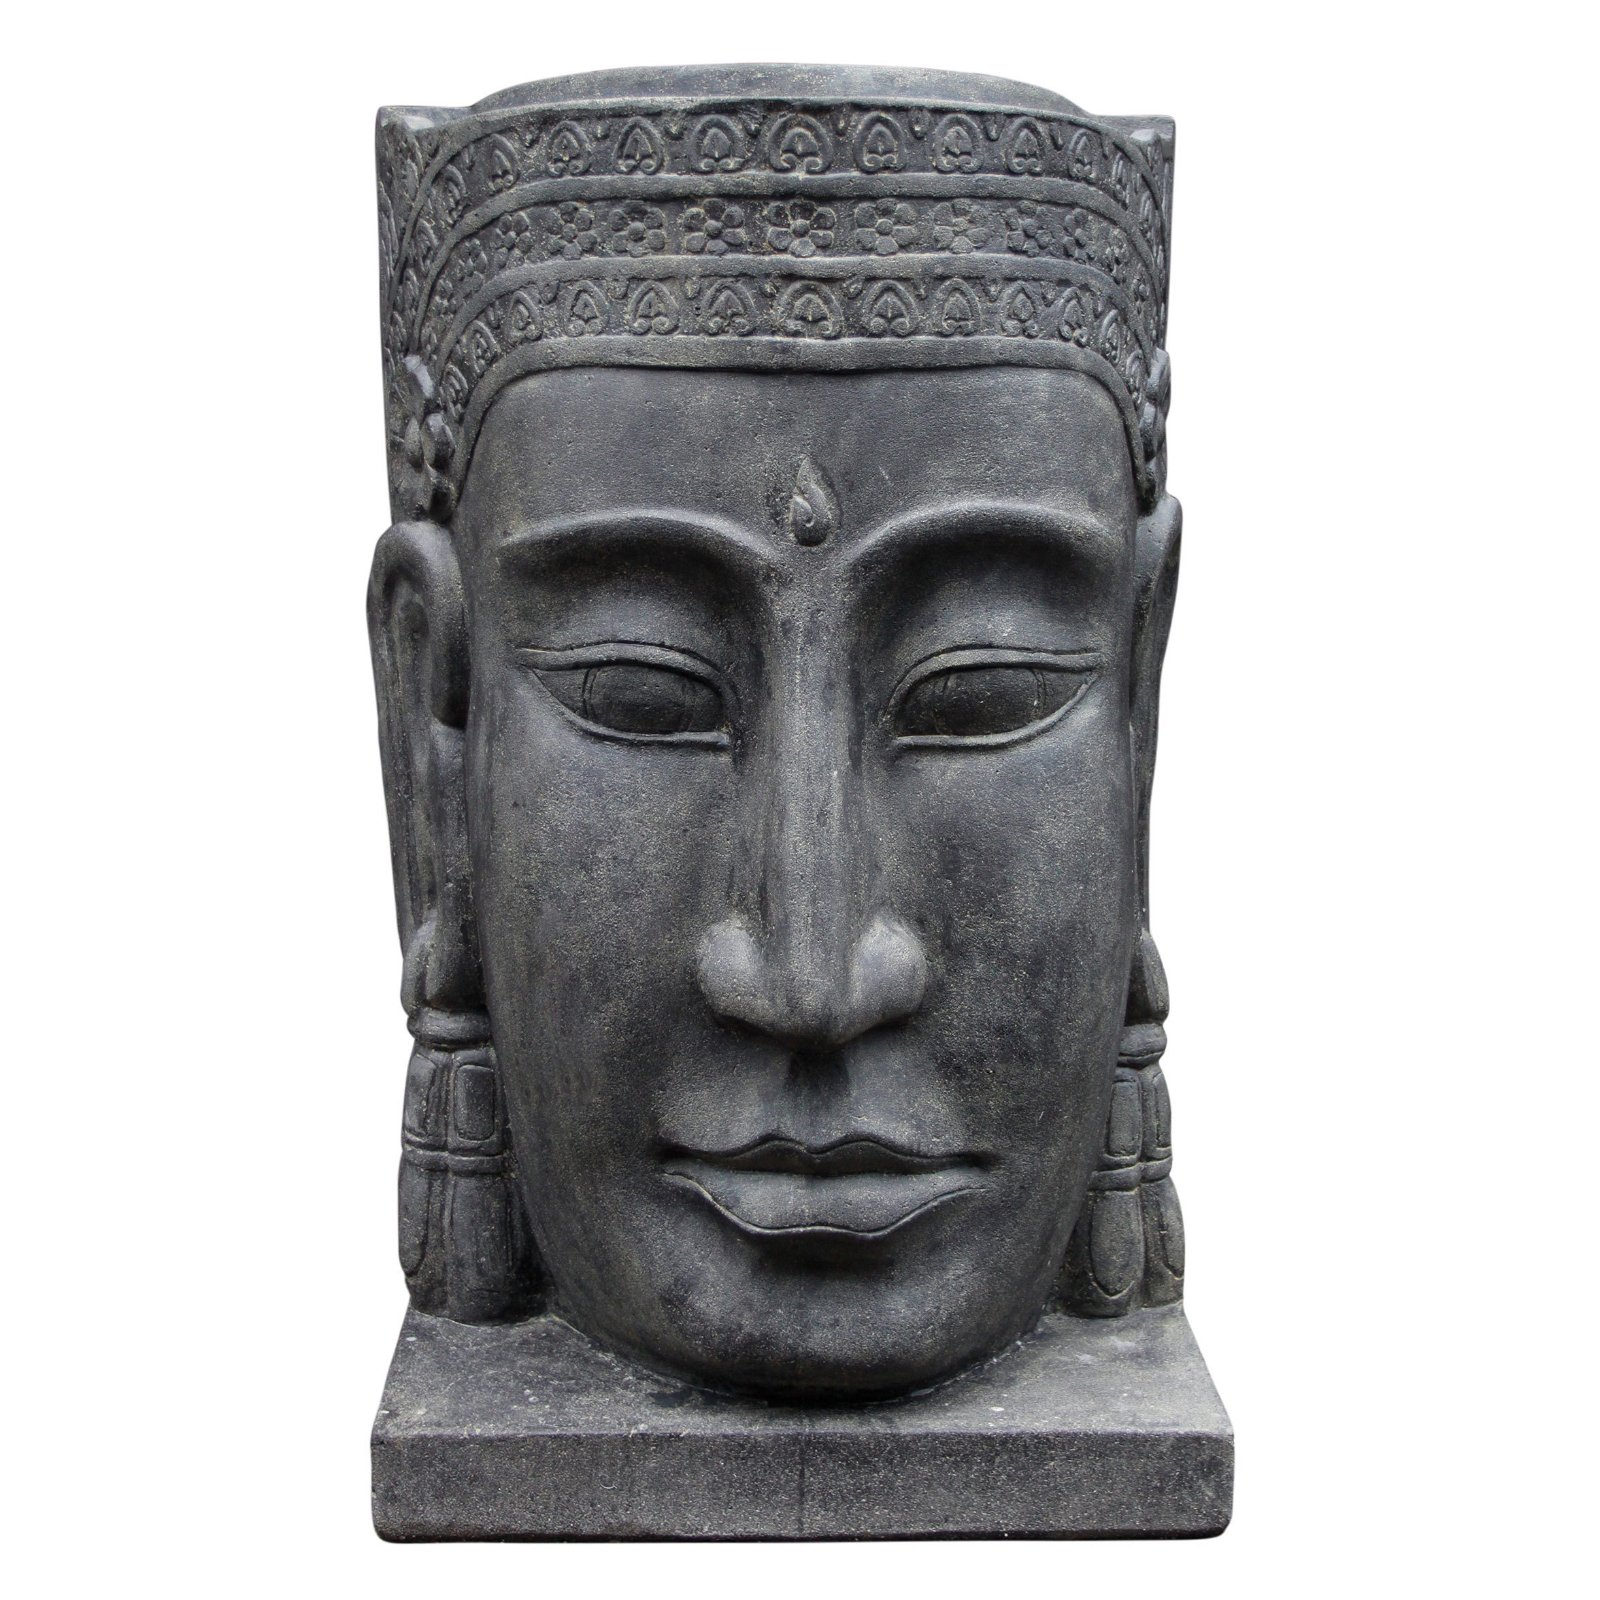 Khmer-Kopf, Wasserspiel, grau, Steinguss, 96 x 60 x 147 cm, 177 kg